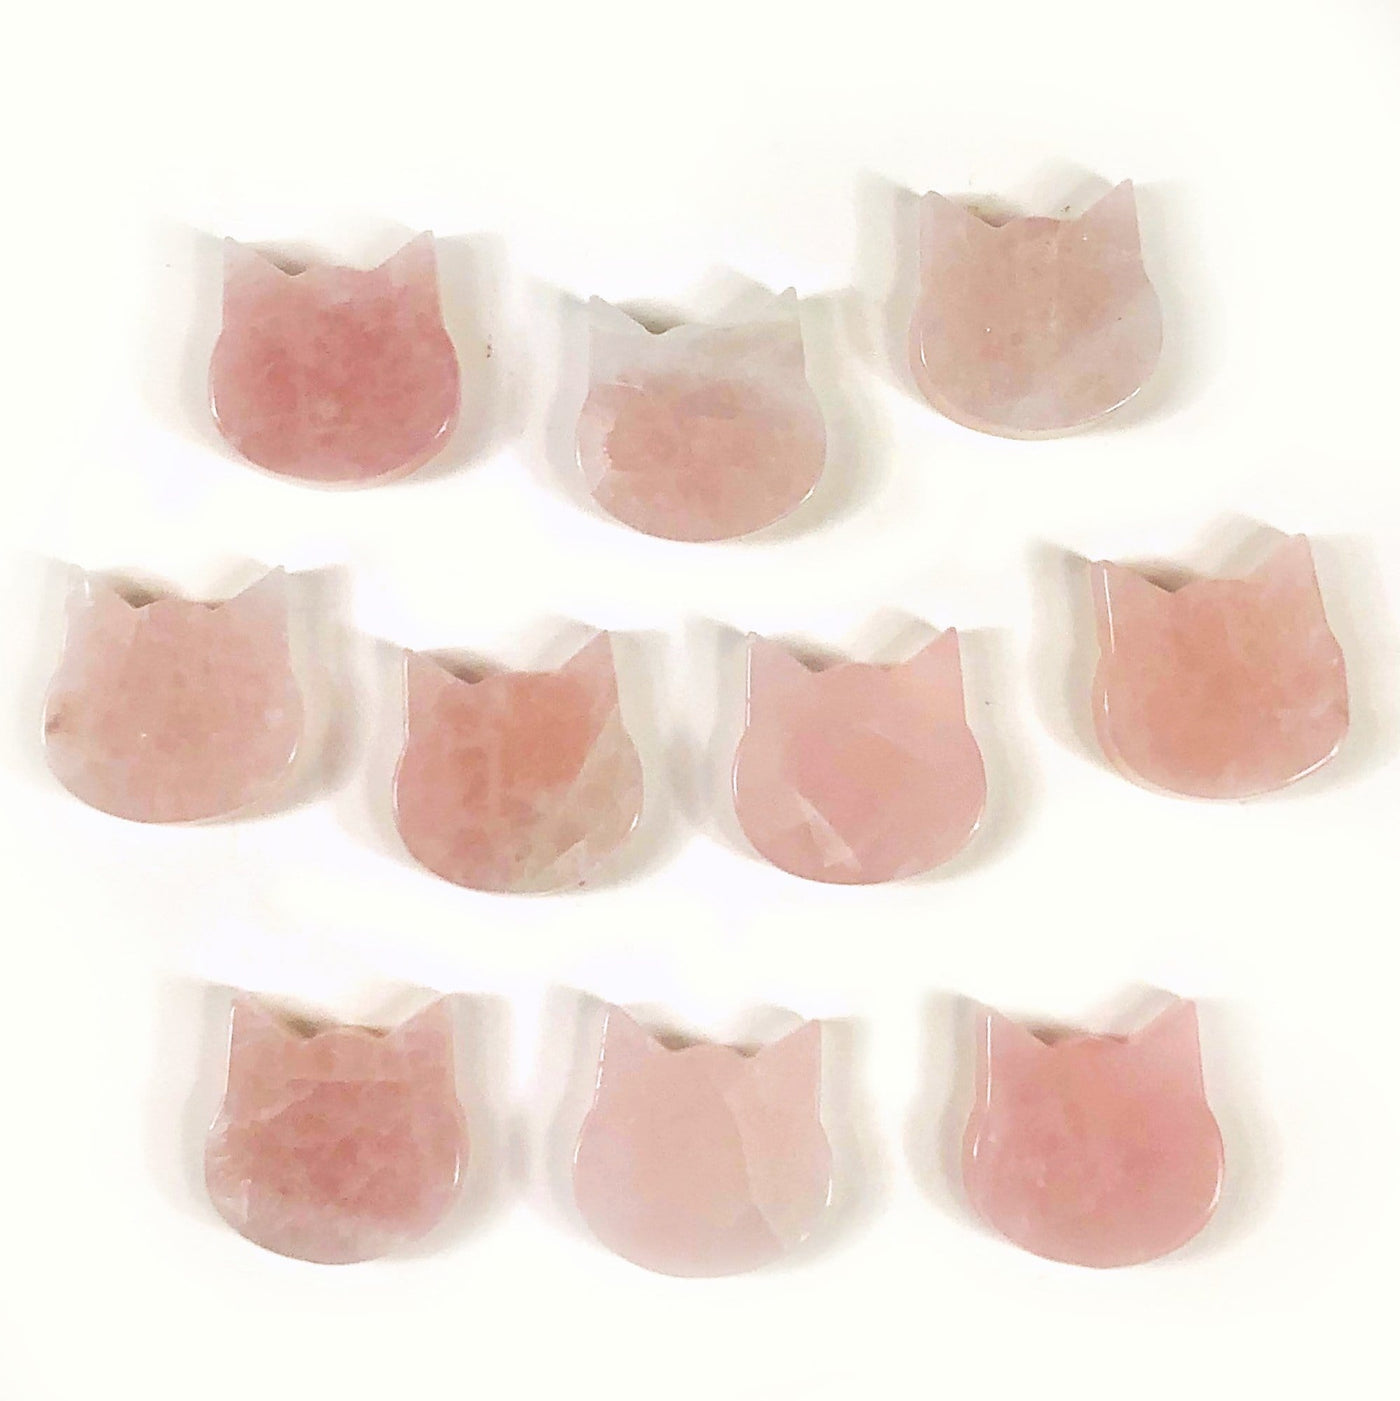 cat stone heads available in rose quartz